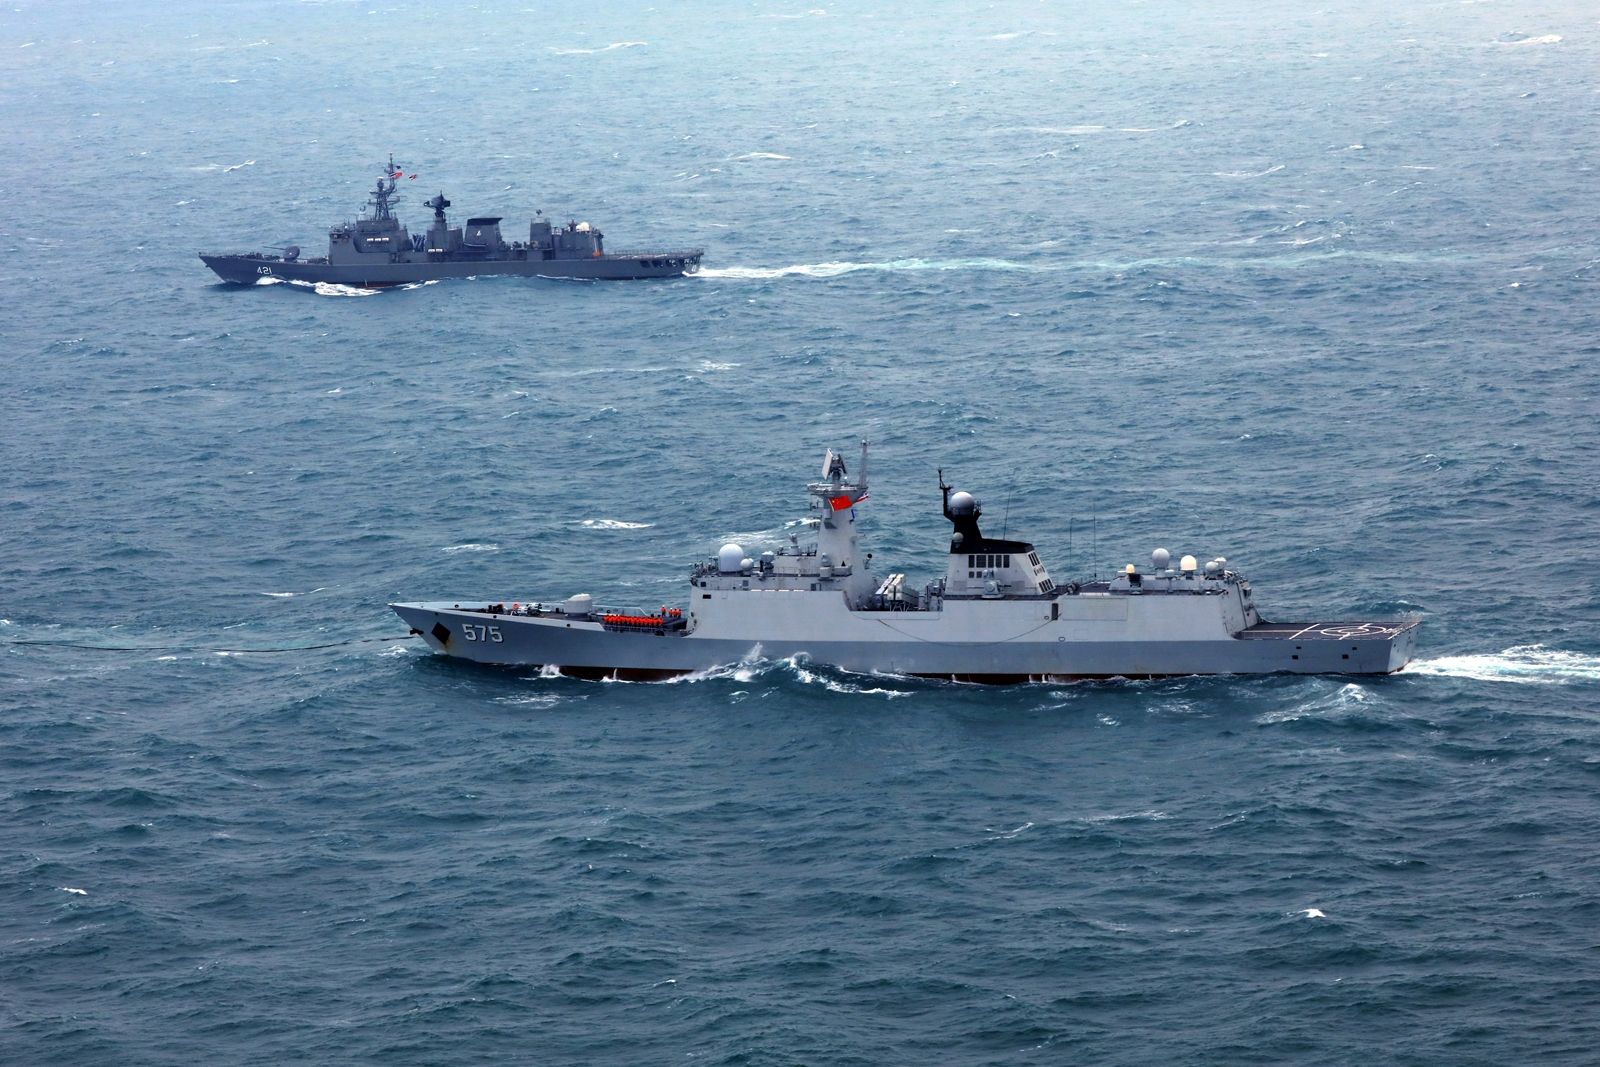 Reuters-เรือรบหลวงนเรศวรร่วมฝึกซ้อมรบทางทะเล (ซ้าย) และเรือรบเยว่หยางของจีน (ขวา) ฝึกซ้อมรบทางทะเลที่ชานเว่ย กวางตุ้ง พ.ค.2562.JPG